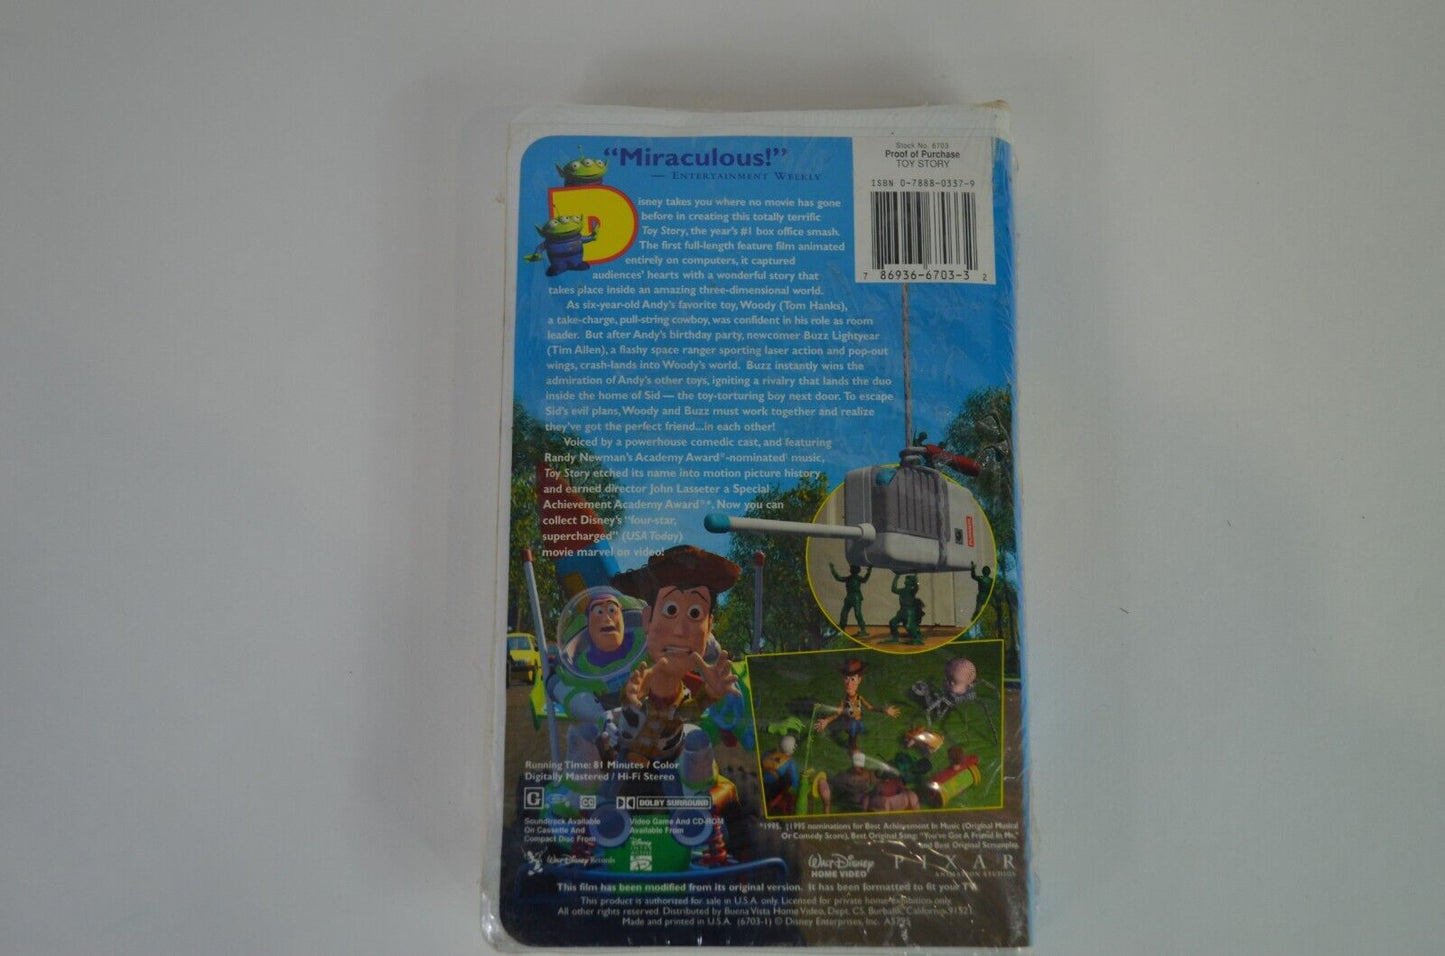 Walt Disney Home Video Toy Story VHS Cassette Tape Brand New Sealed